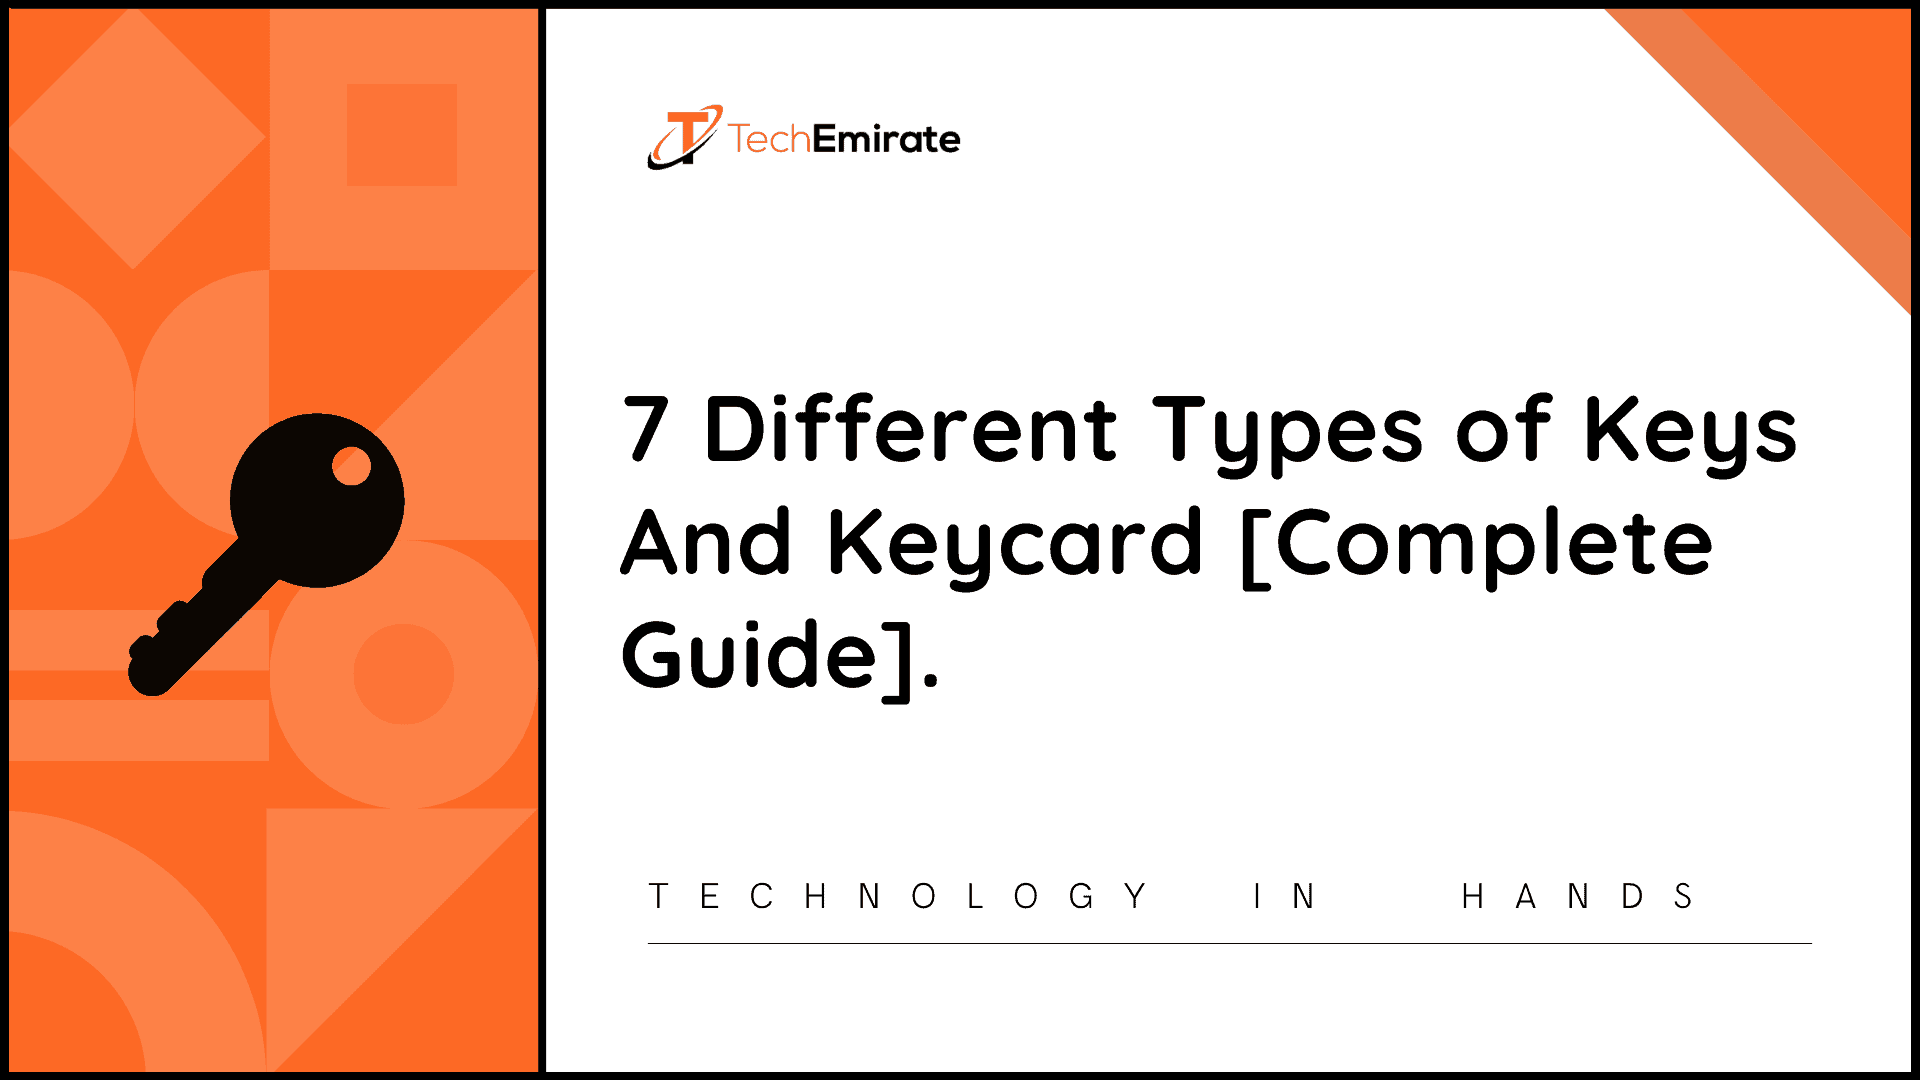 techemirate.com - Types of Keys